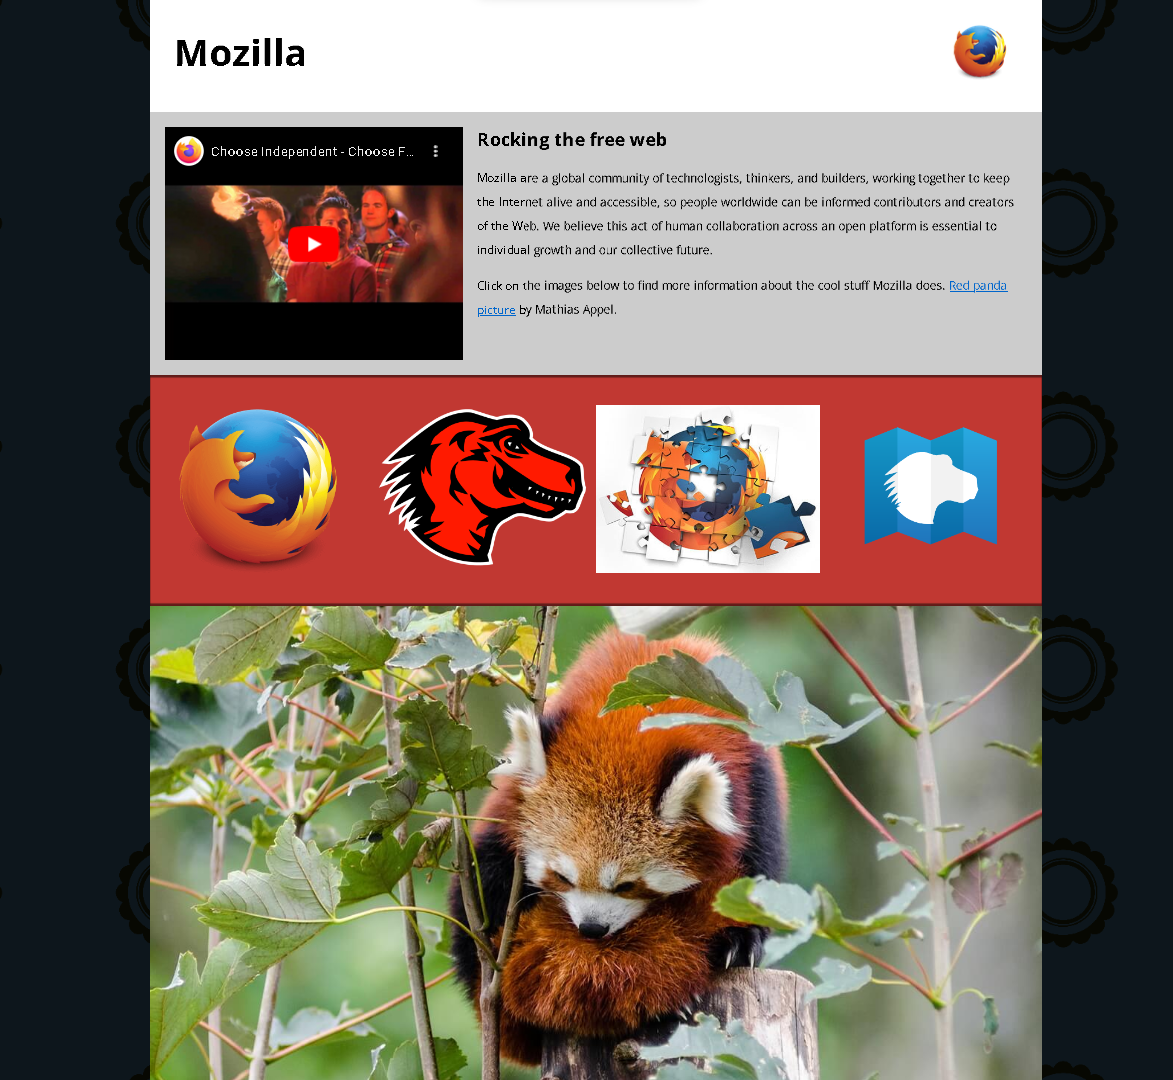 1st result screenshot of "mozilla-splash-page" project